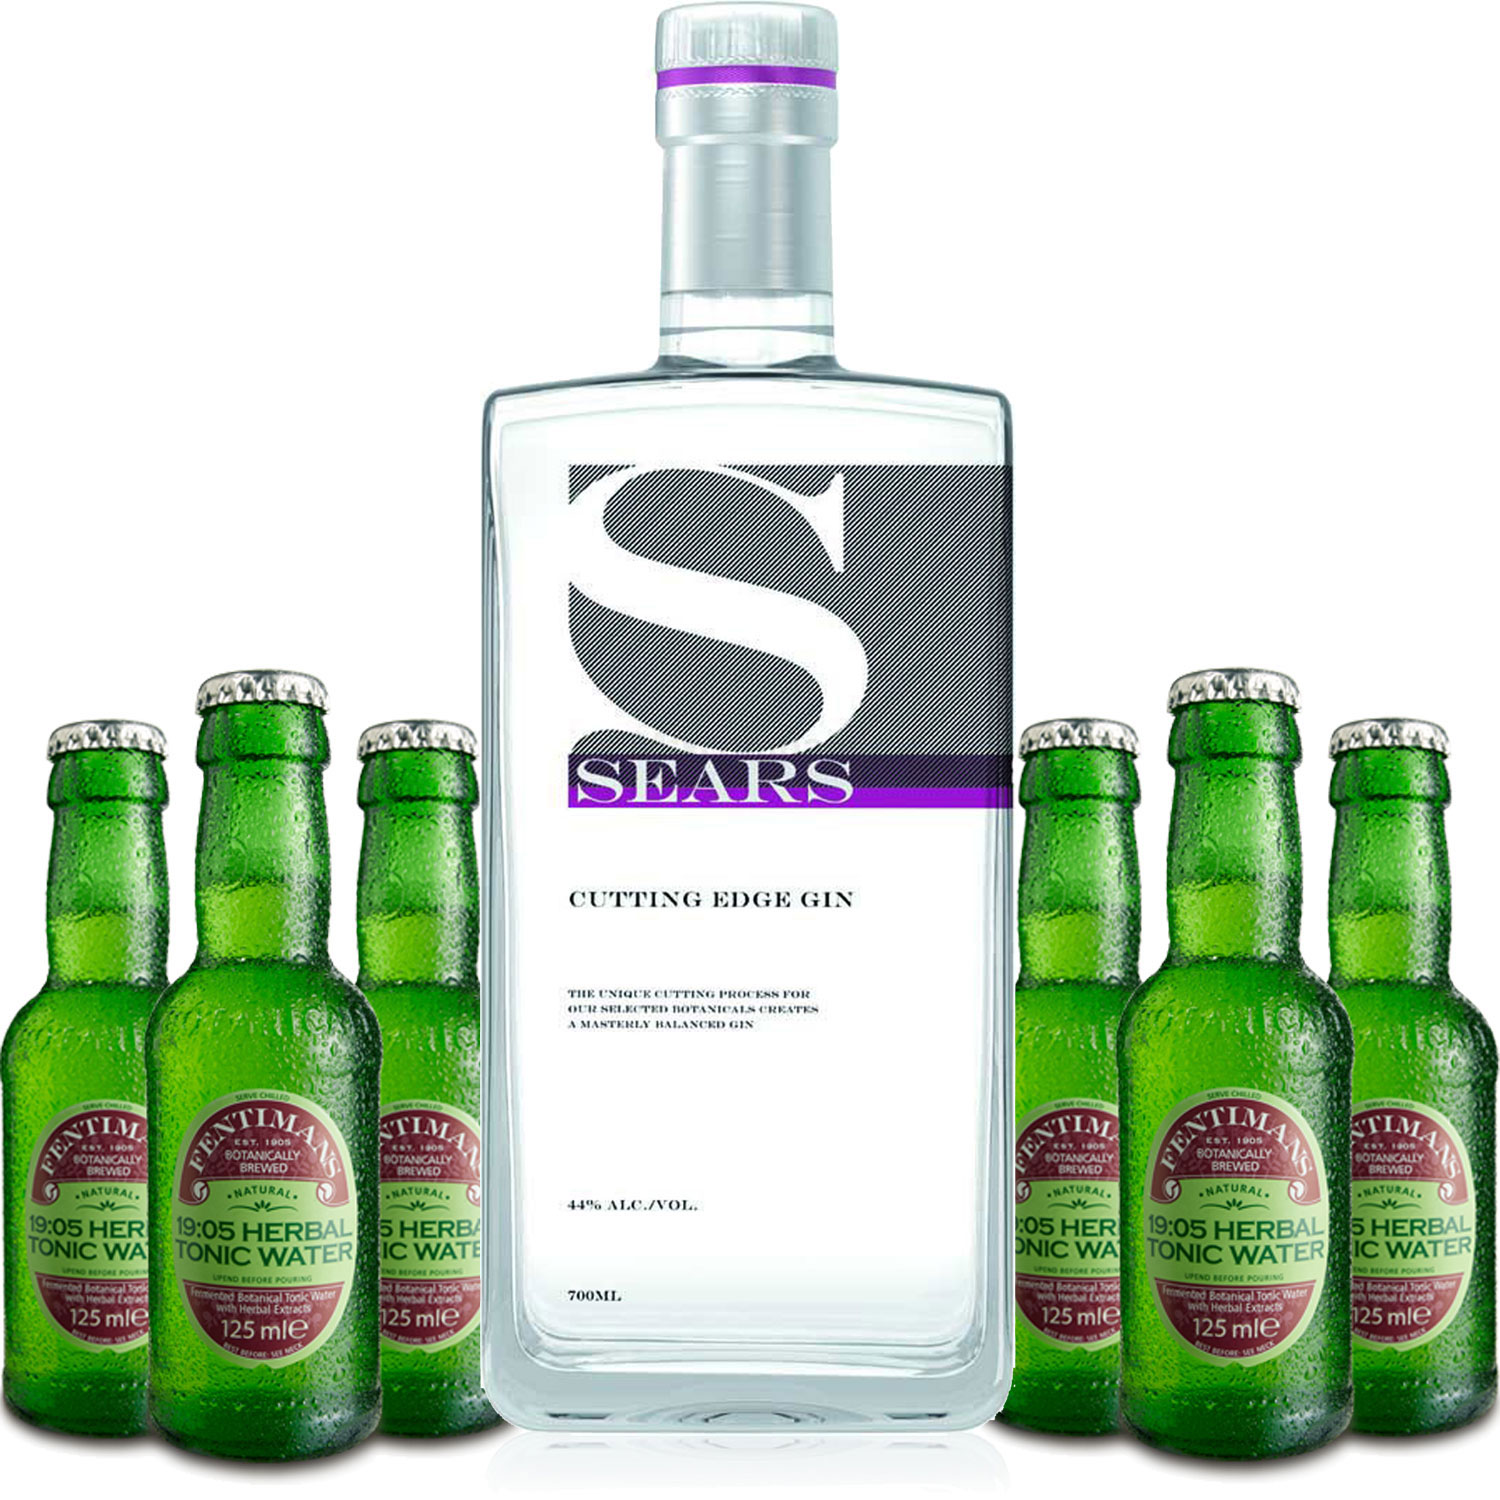 Gin Tonic Set - Sears Cutting Edge Gin 0,7l 700ml (44% Vol) + 6x Fentimans Herbal Tonic Water 200ml inkl. Pfand MEHRWEG